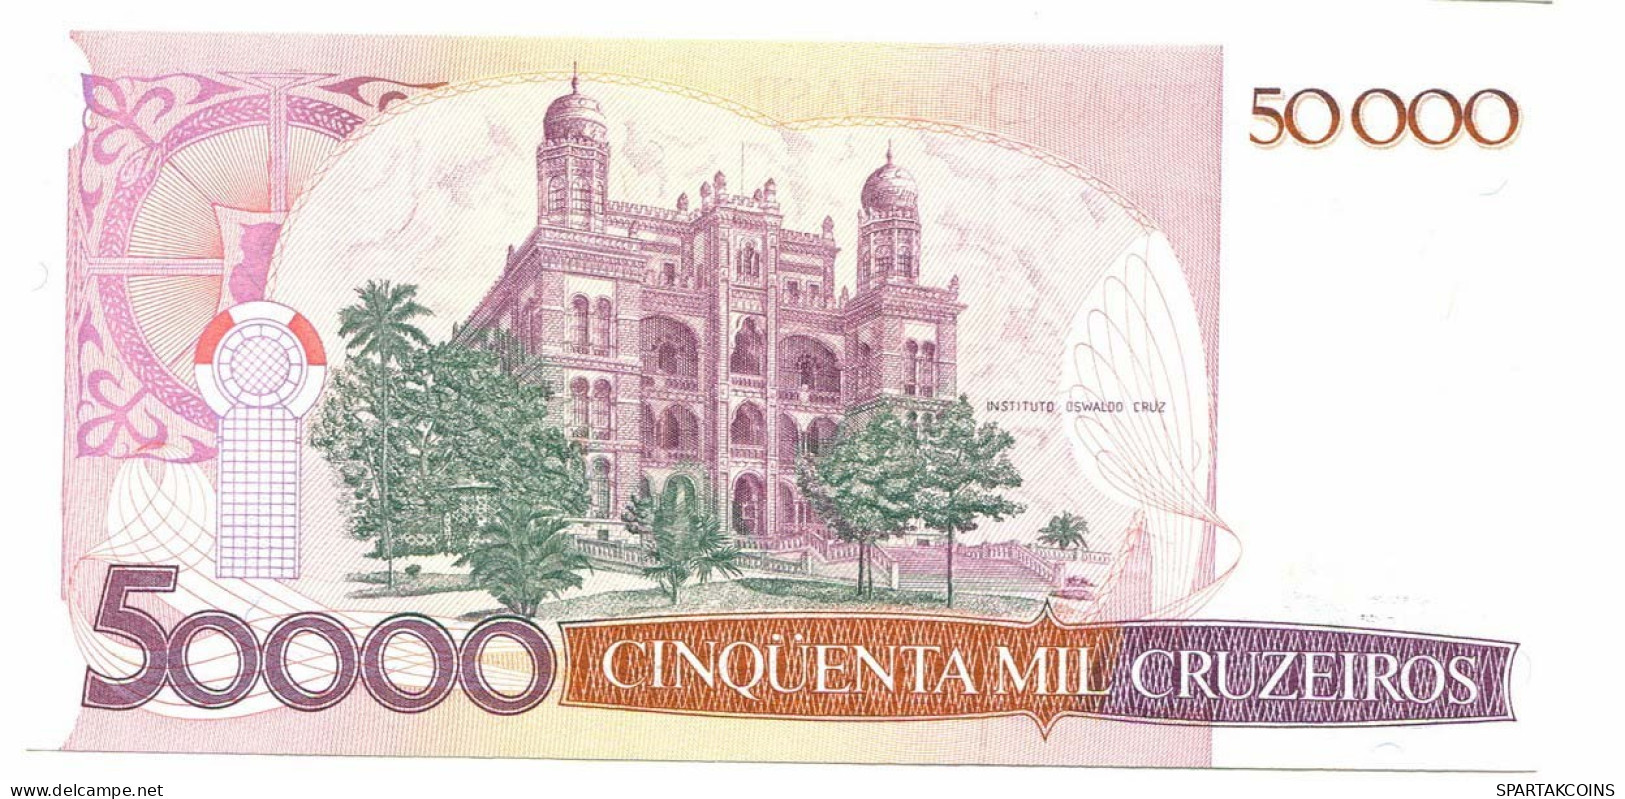 BRASIL 50000 CRUZEIROS 1986 UNC Paper Money Banknote #P10889.4 - [11] Emissions Locales